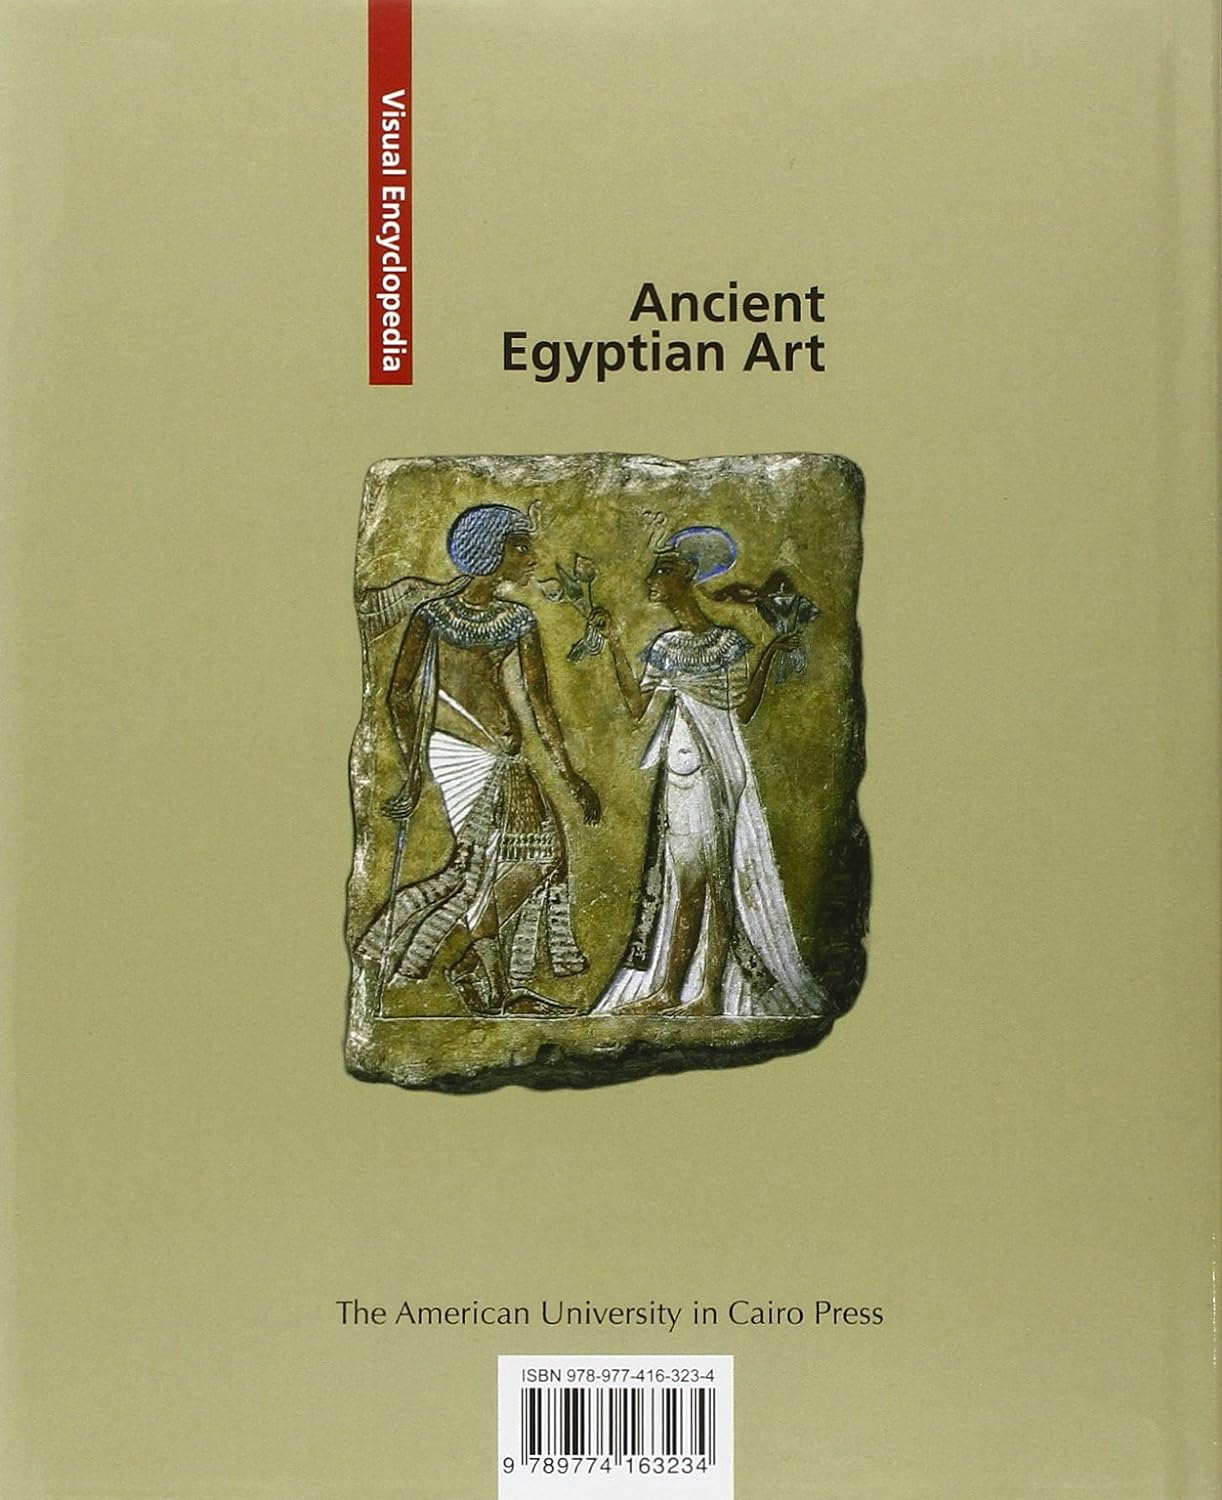 Ancient Egyptian Art: A Visual Encyclopedia - Hard Cover